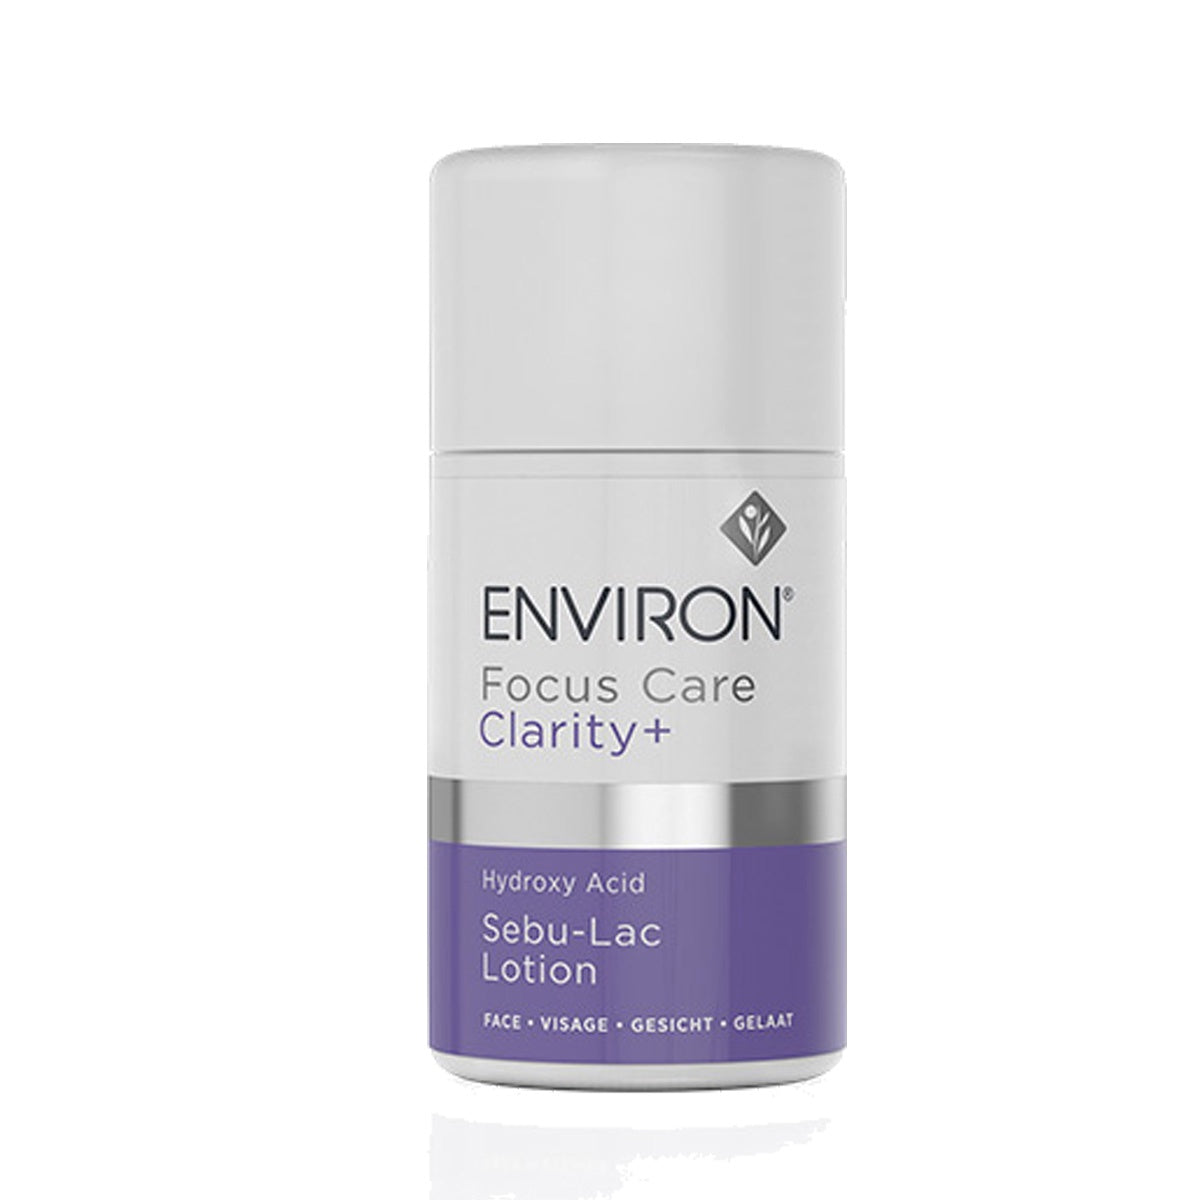 ENVIRON (Focus Care Clarity+) Hydroxy-Acid Sebu-Lac Lotion